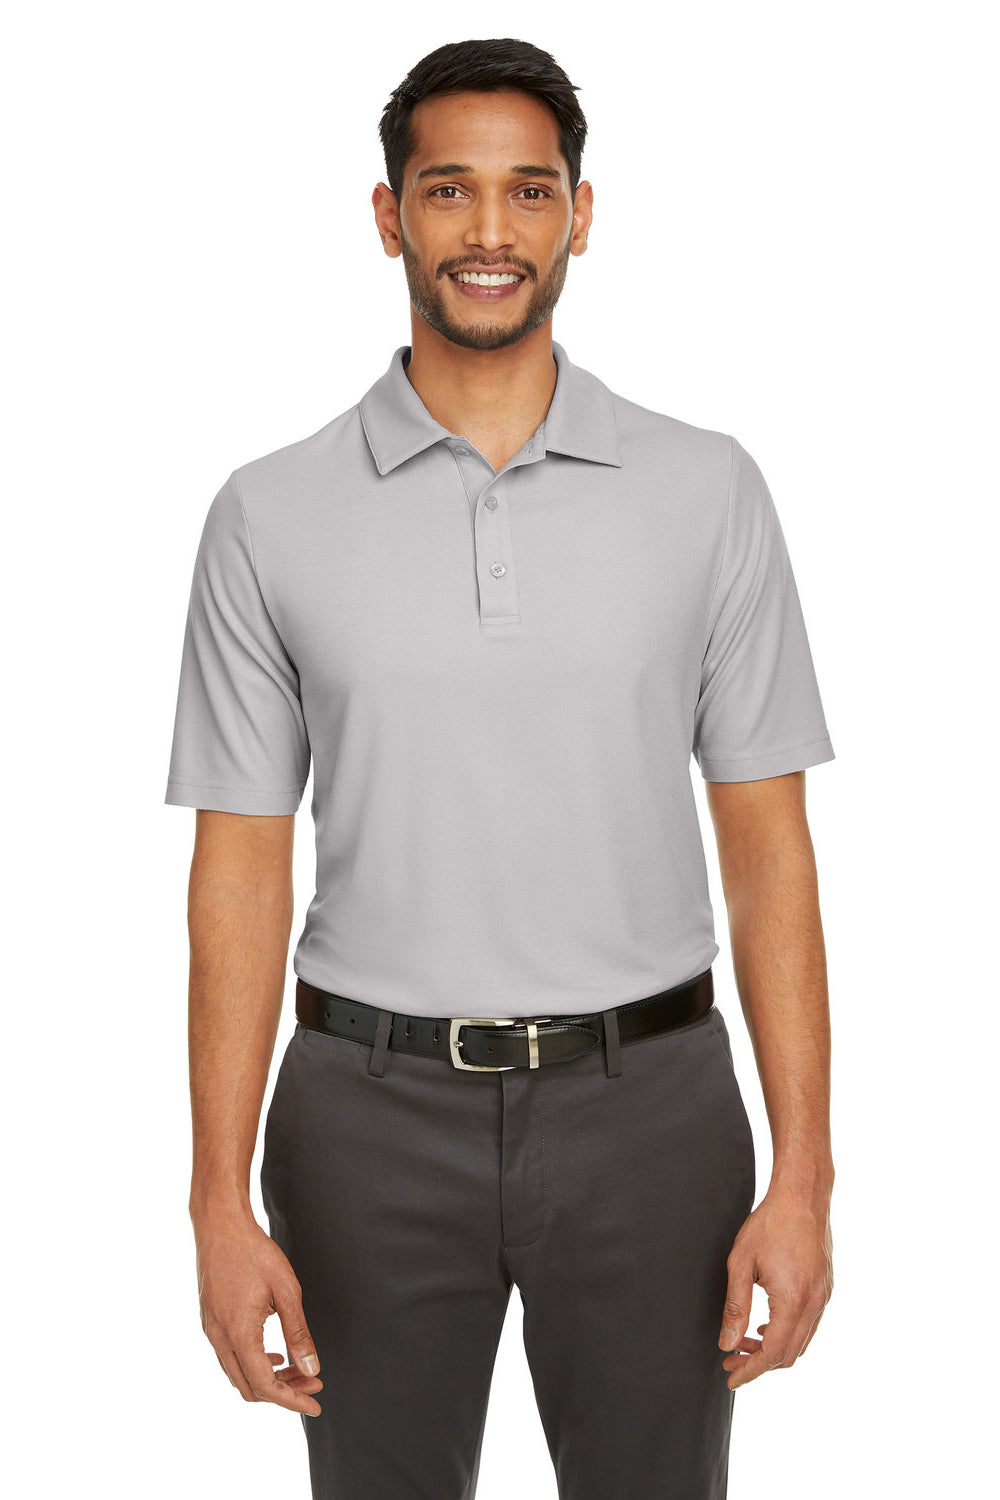 Core 365 CE112 Mens Fusion ChromaSoft Performance Moisture Wicking Short Sleeve Polo Shirt Platinum Grey Front